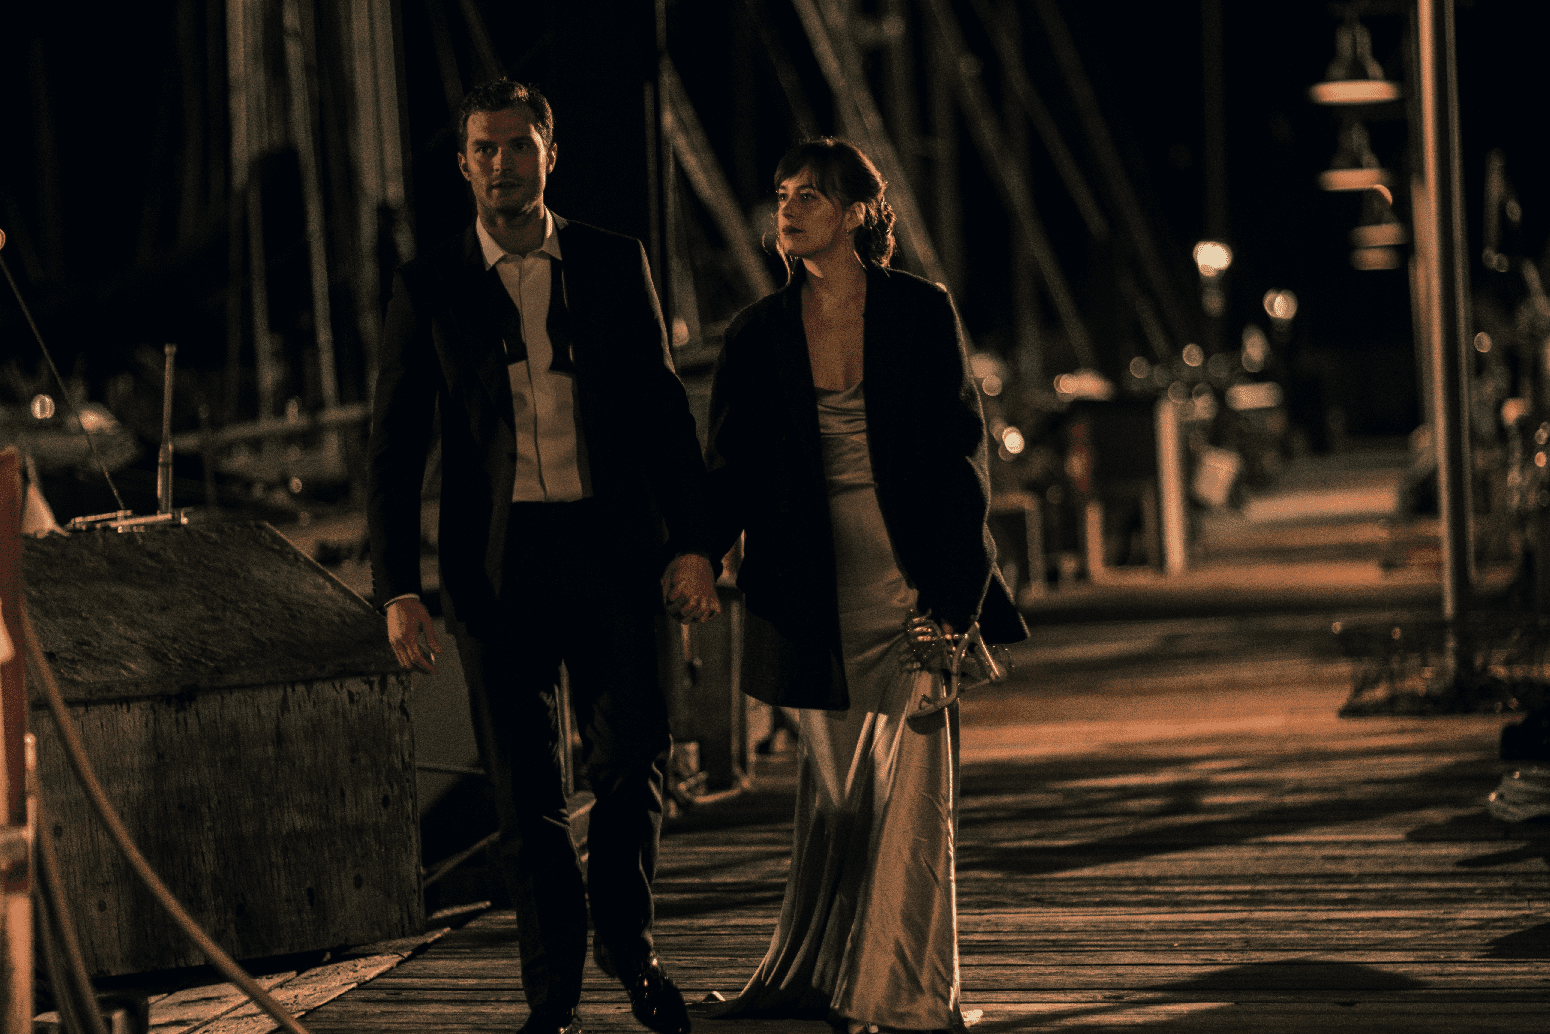 Ana (Dakota Johnson) and Christian (Jamie Dornan) in "Fifty Shades Darker". (United International Pictures)